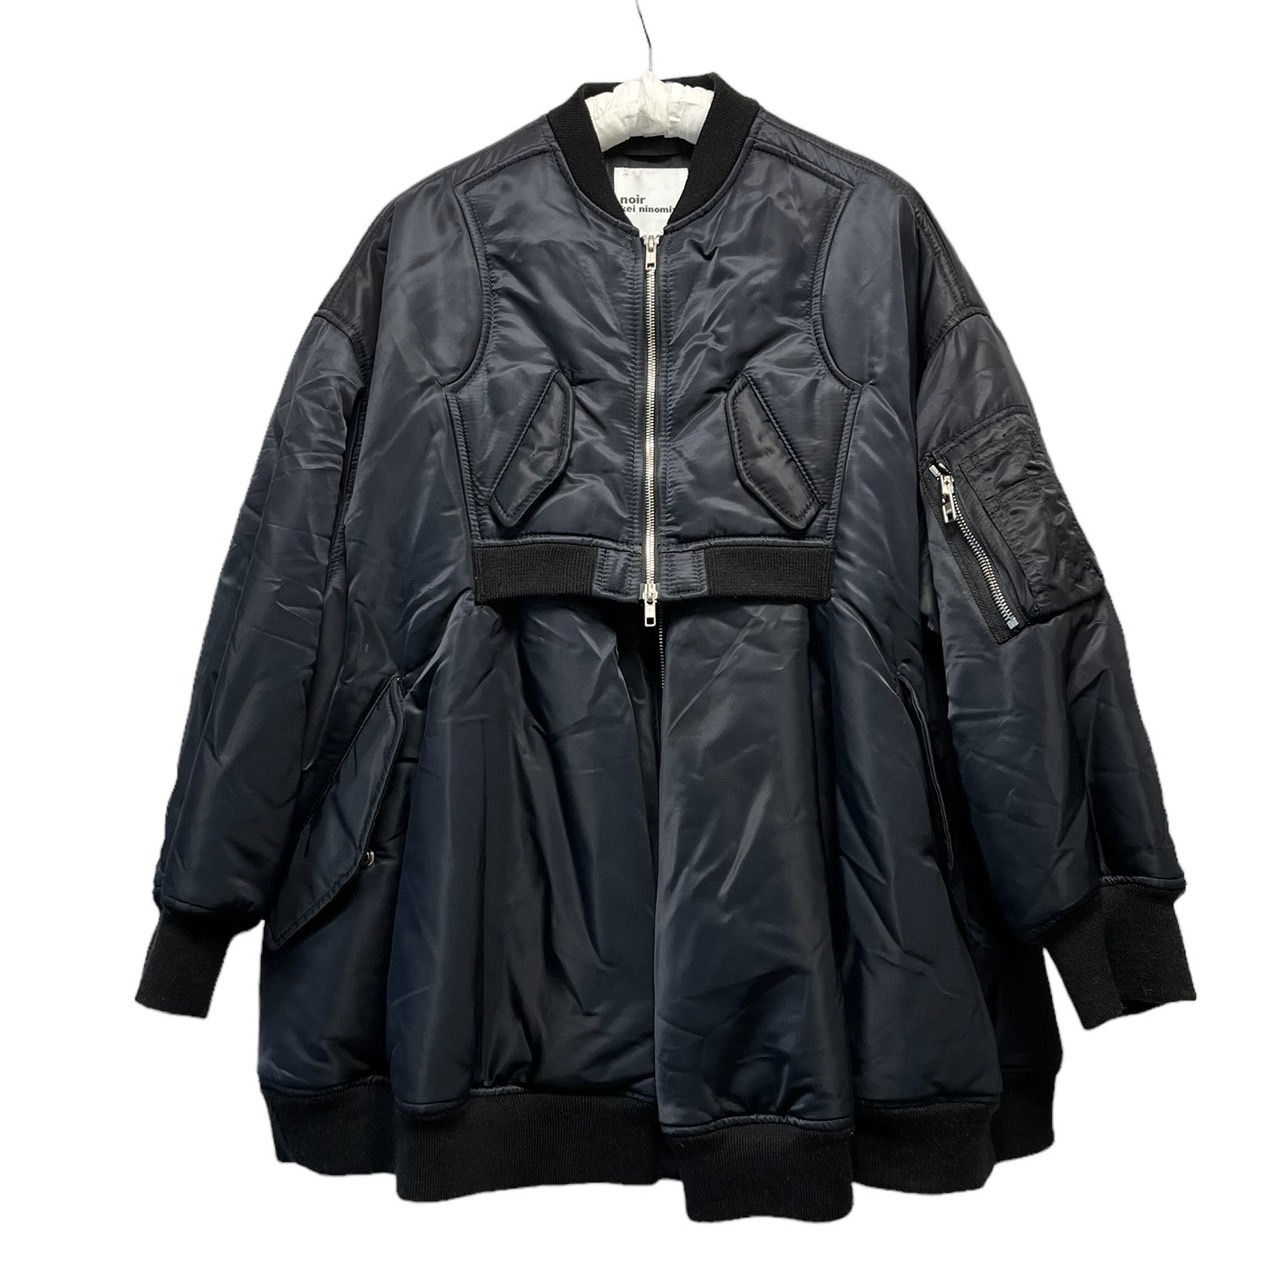 noir kei ninomiya 18AW Bomber jacket 3B-J026 買取金額 27,300円